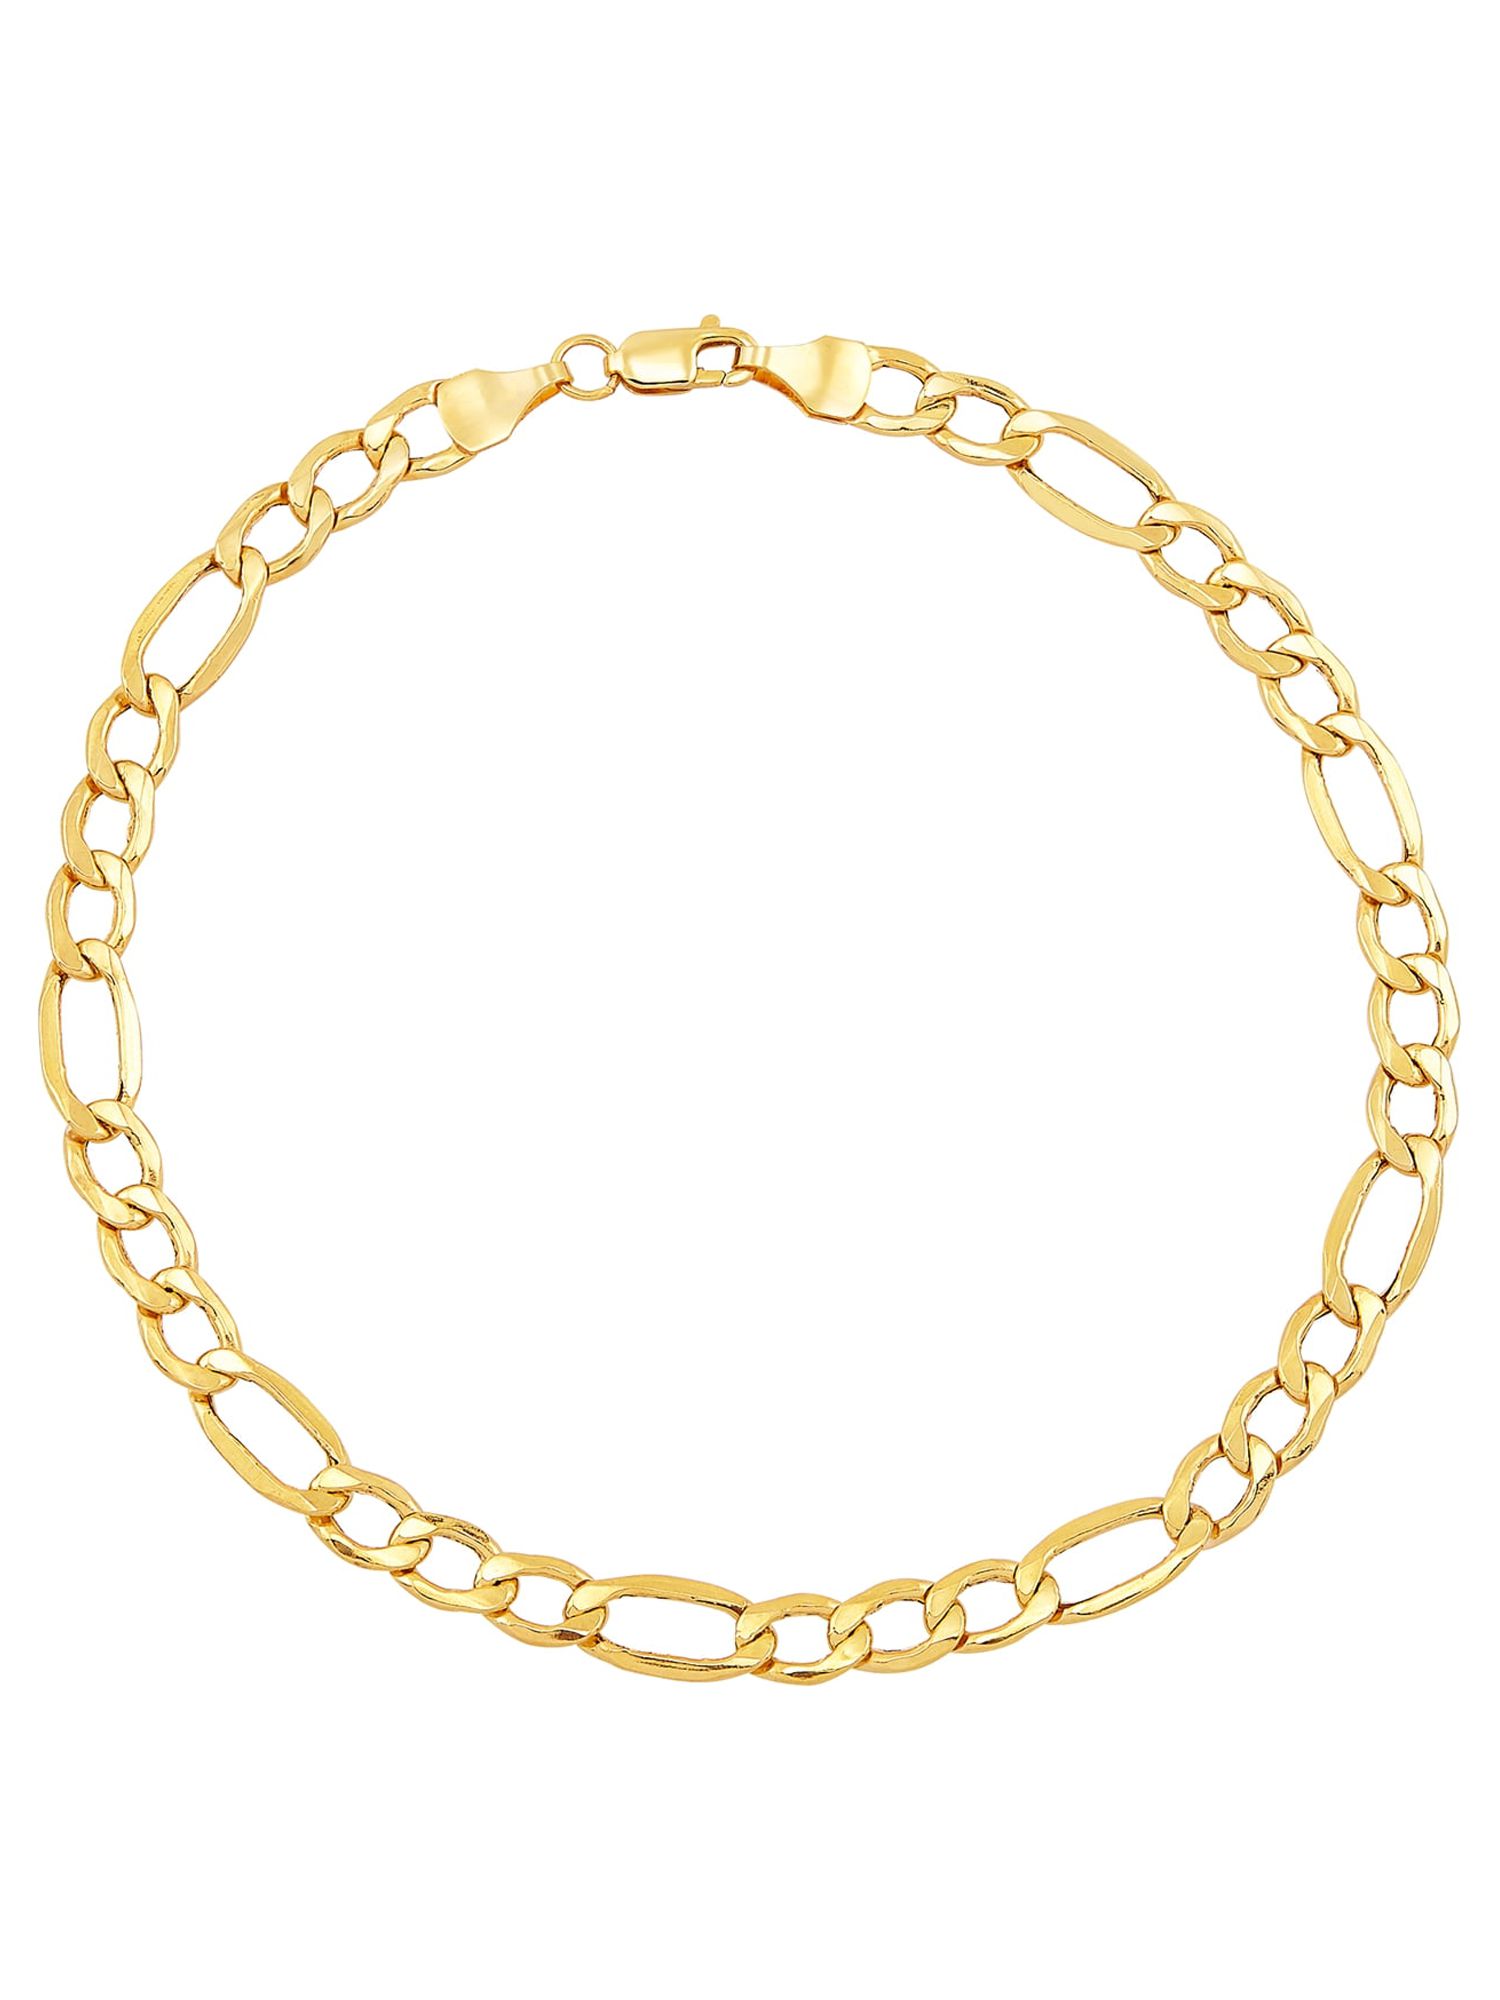 Brilliance Fine Jewelry 10K Yellow Gold 3 round 1 oval Link Figaro Bracelet, 8.5" - image 1 of 4